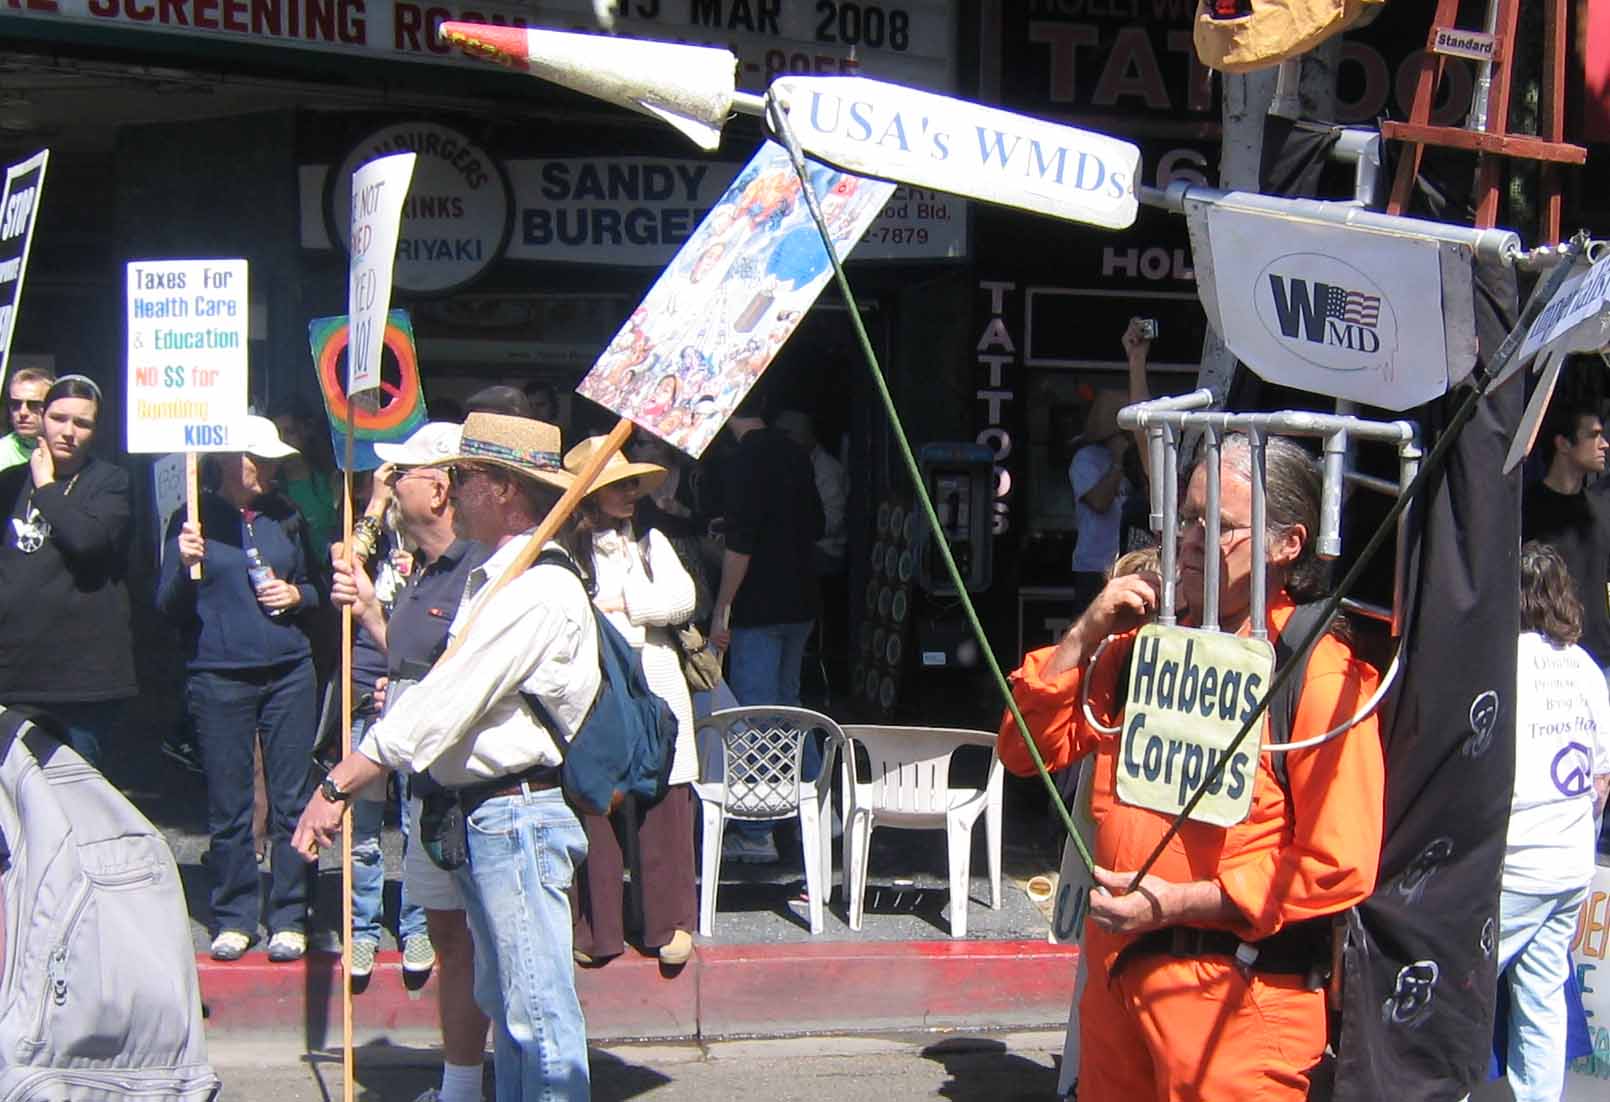 Los Angeles Iraq War Invasion Protest March 15, 2008